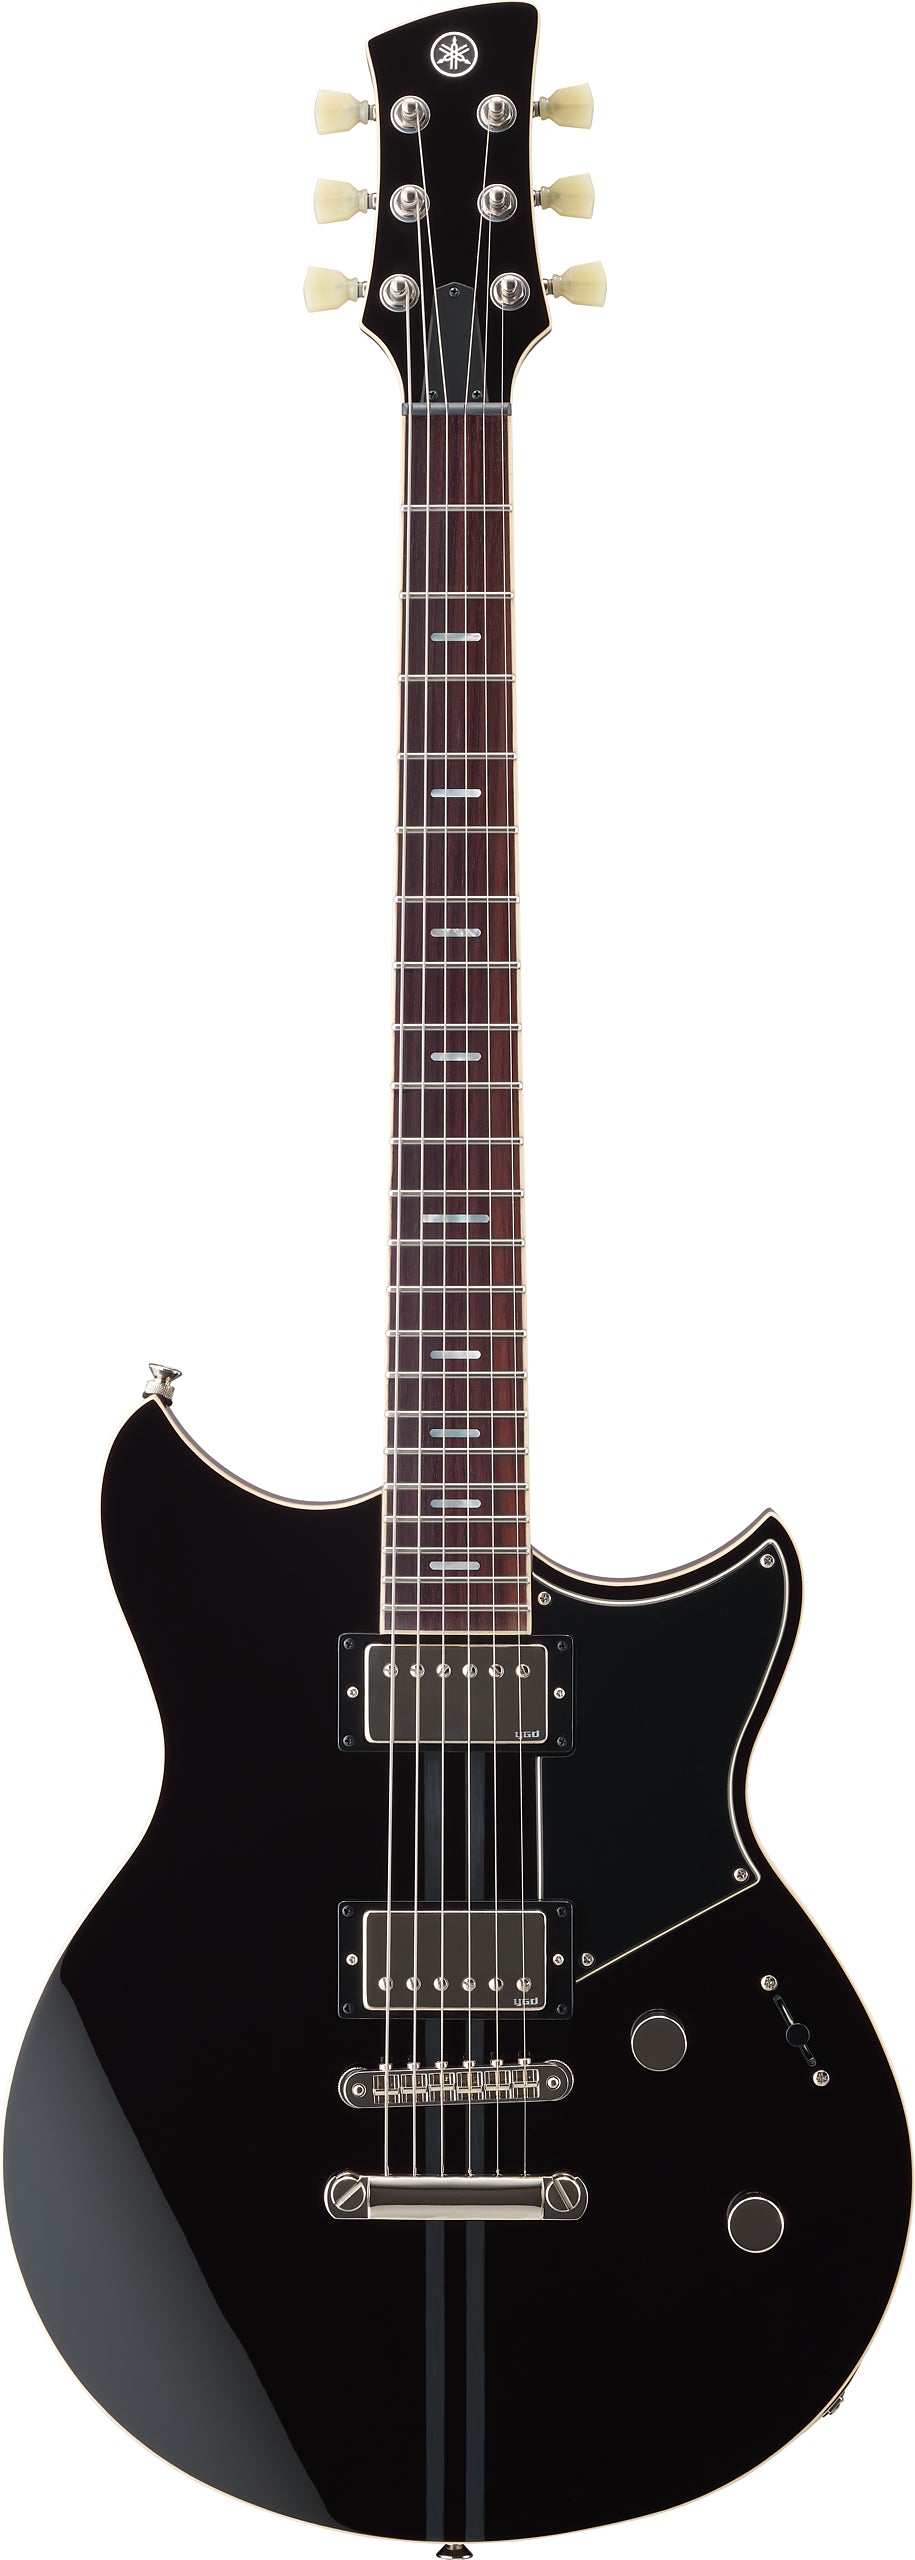 Yamaha Revstar II RSS20 Standard Electric Guitar